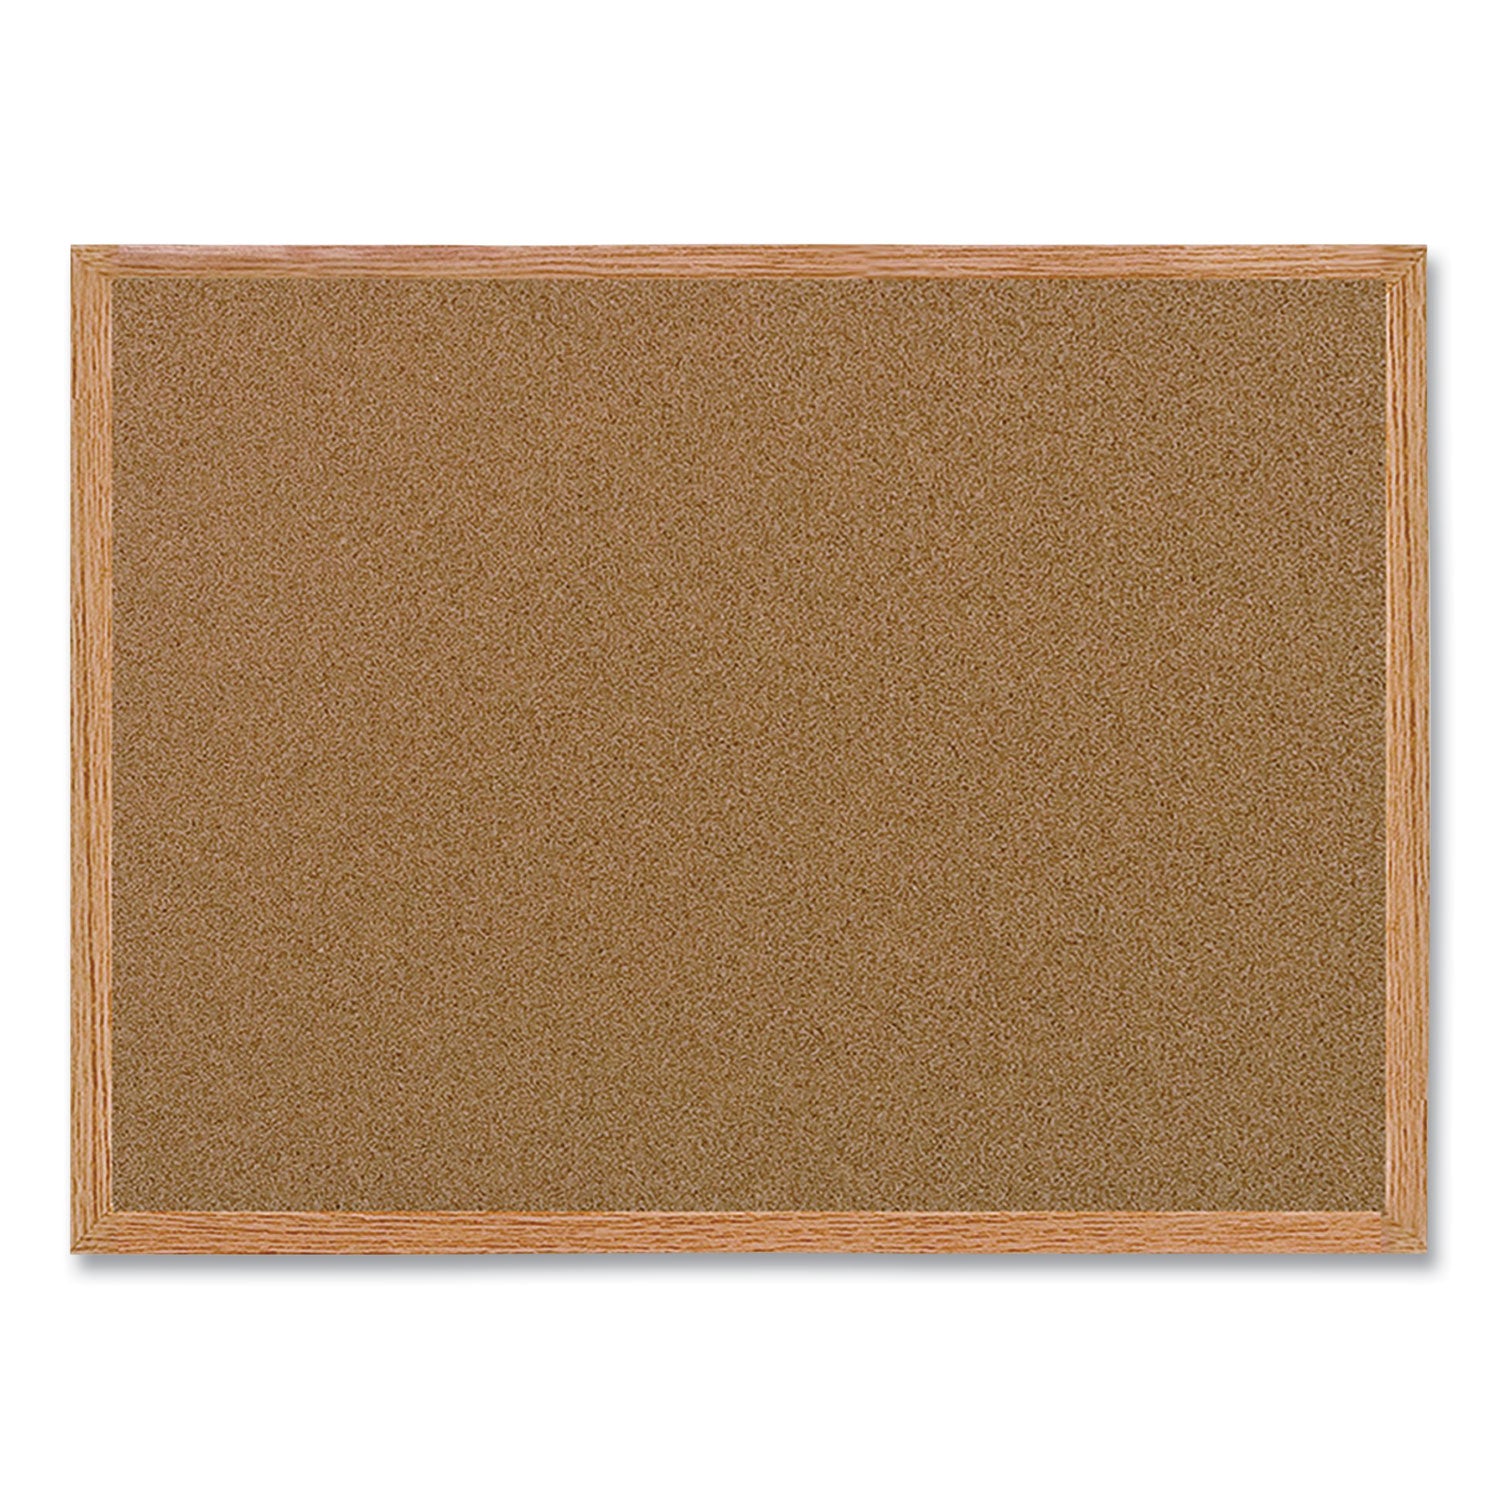 value-cork-bulletin-board-with-oak-frame-24-x-36-brown-surface-oak-frame_bvcmc070014231 - 1